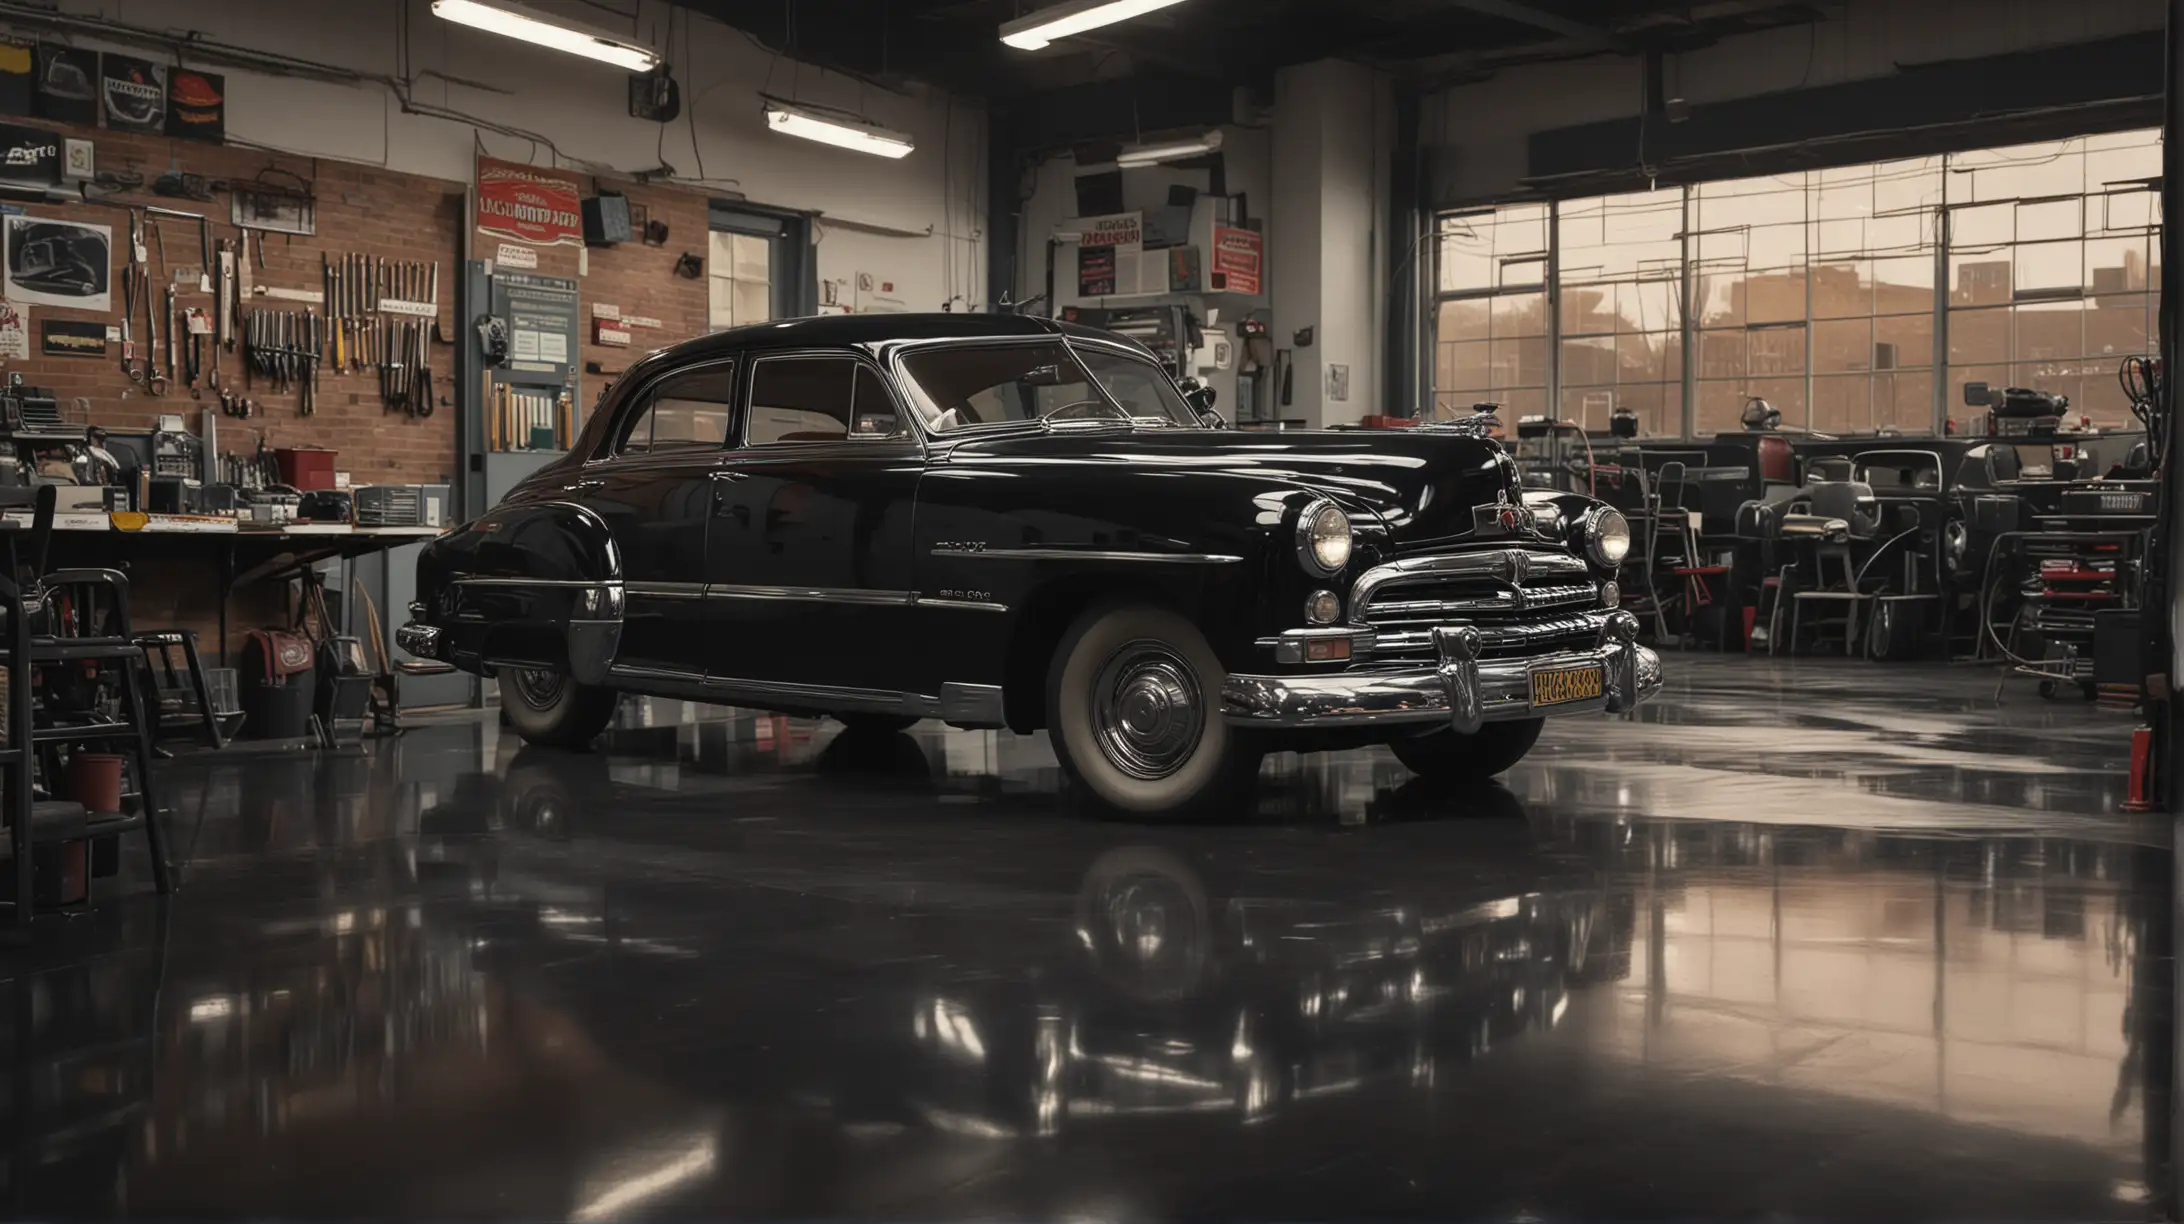 Vintage 1949 Hudson Commodore in Chromethemed Car Repair Shop